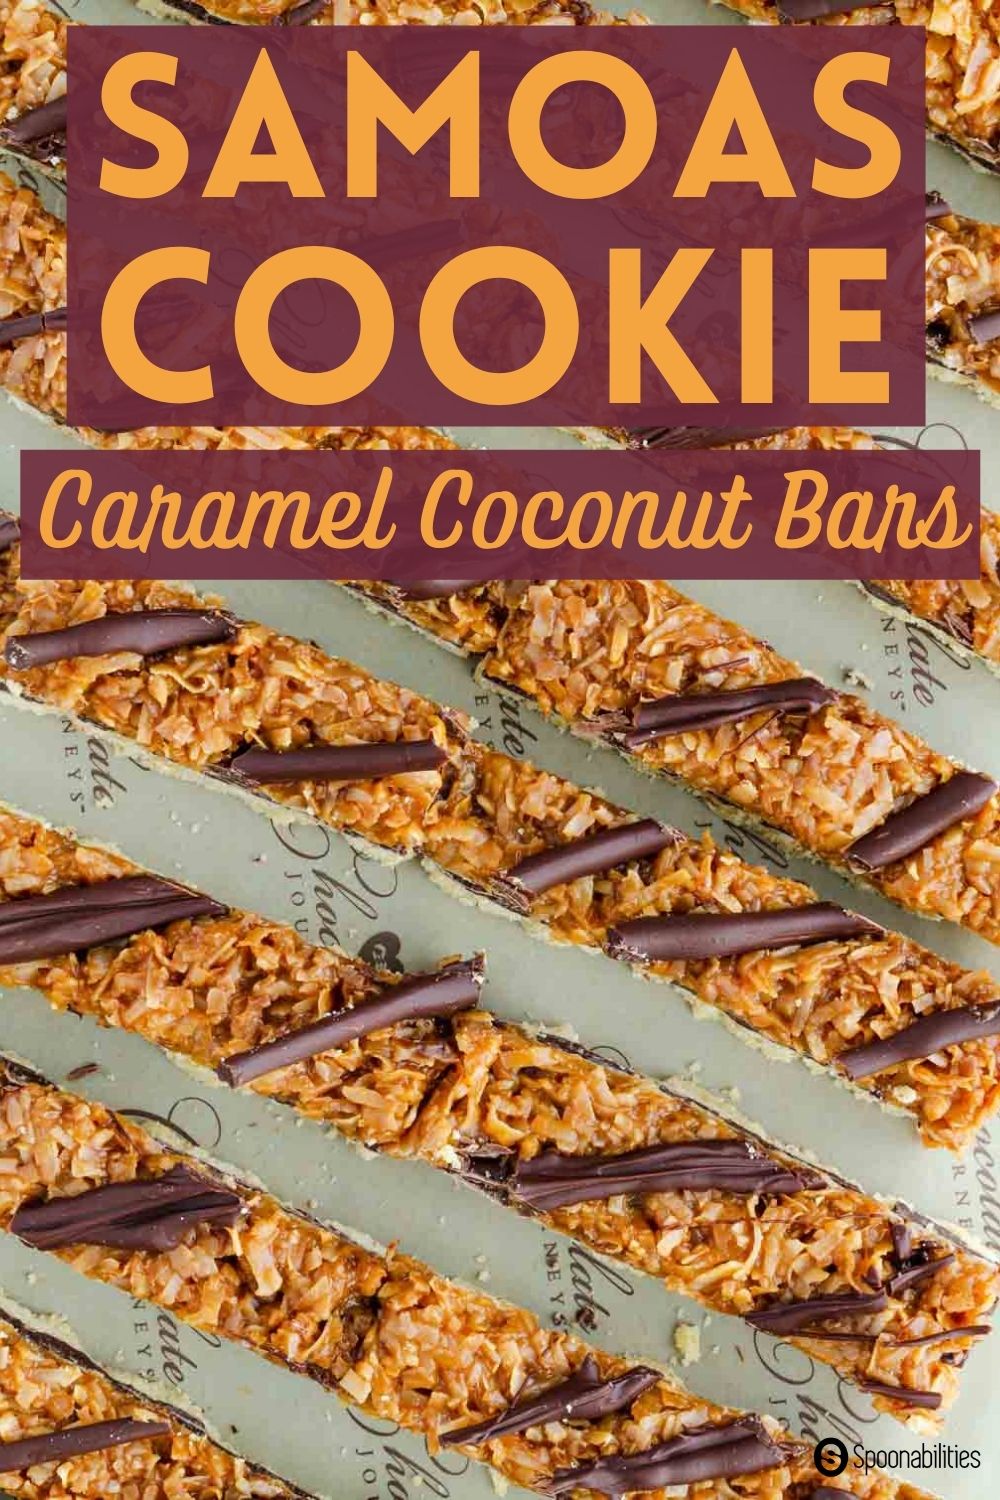 Samoas Cookie Caramel Coconut Bars | Caramel DeLites